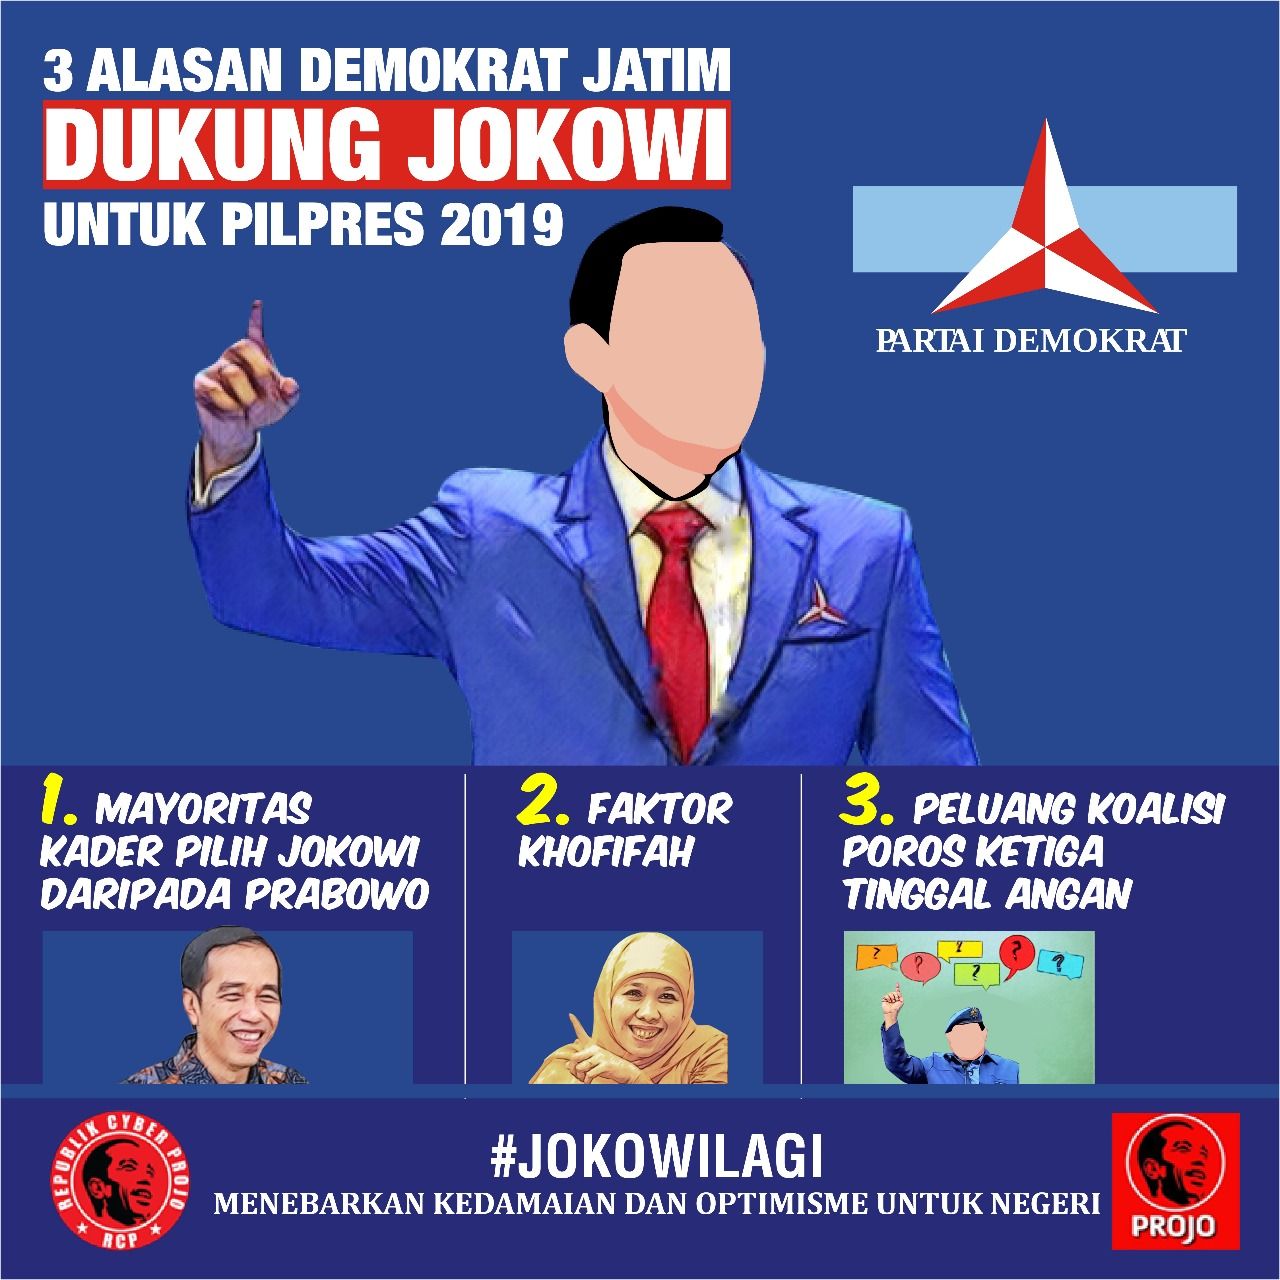 PD Jatim dukung Jokowi - PD Pusat dukung Prabowo